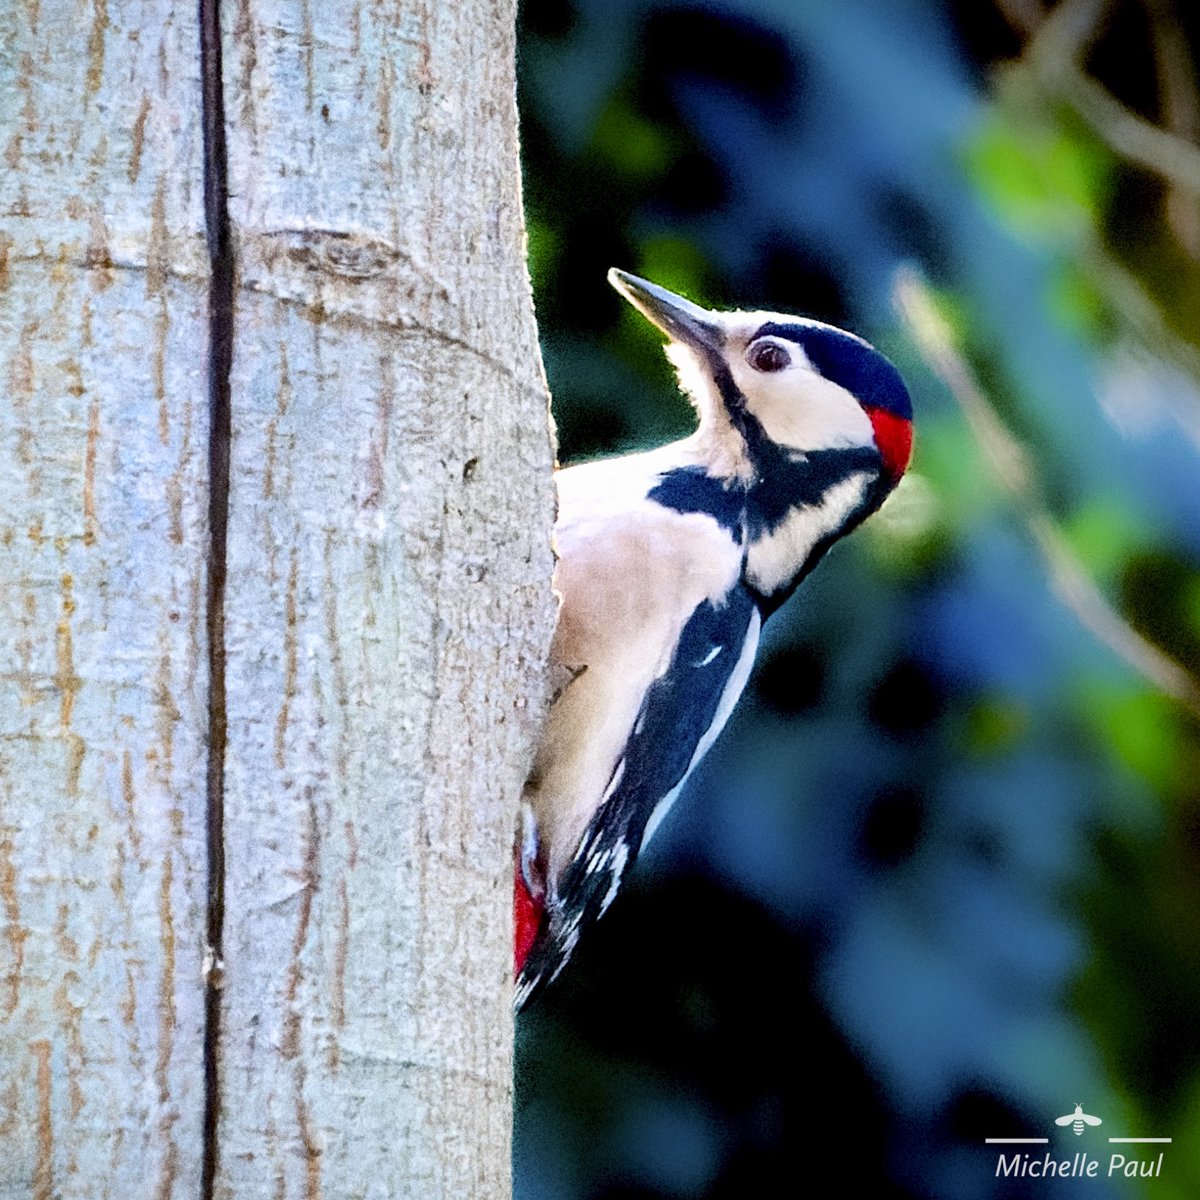 Great spotted woodpecker enjoying the sunshine ☀️ 

#BirdsSeenIn2023 #BirdsOfTwitter #BirdsGiveBack #birdwatching #birdphotography #birds #woodpecker #britishbirds #TwitterNaturePhotography #TwitterNaturePhotography